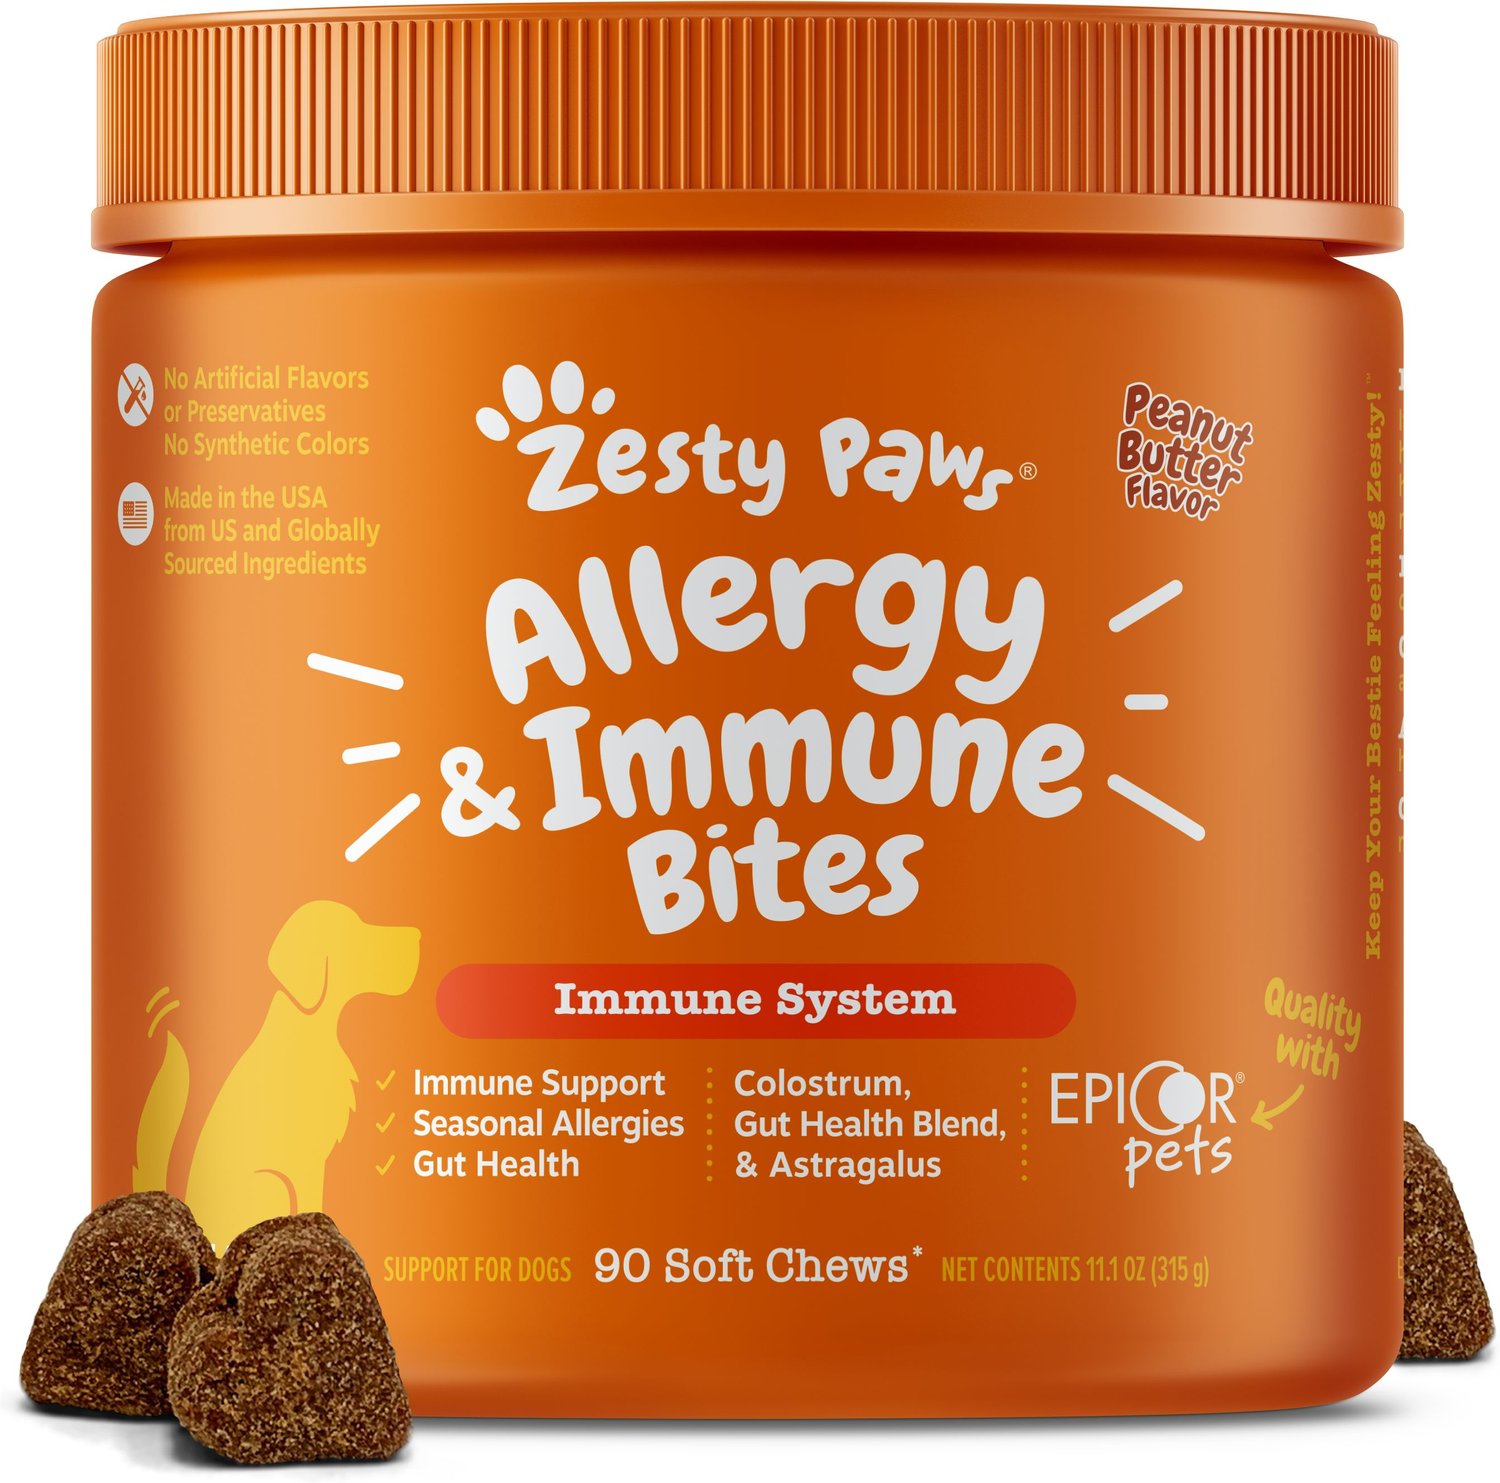 Zesty Paws Aller-Immune Bites Peanut Butter Flavored Soft Chews Allergy & Immune Supplement for Dogs